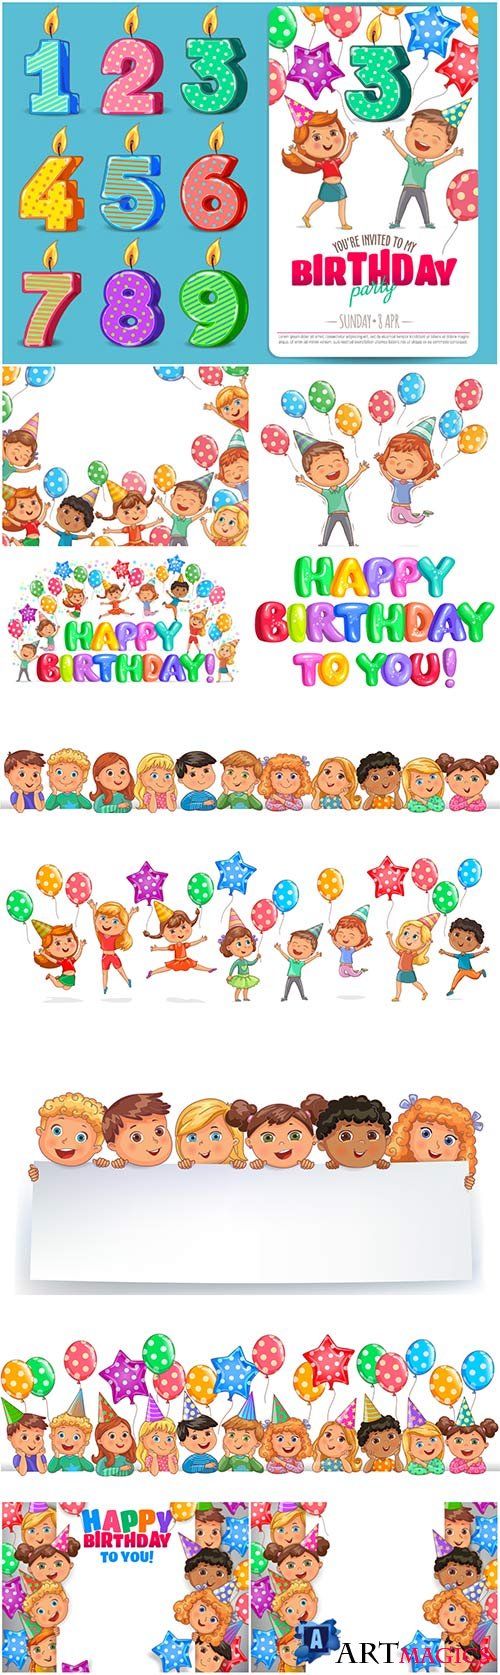 Happy birthday vector illustration, funny kids